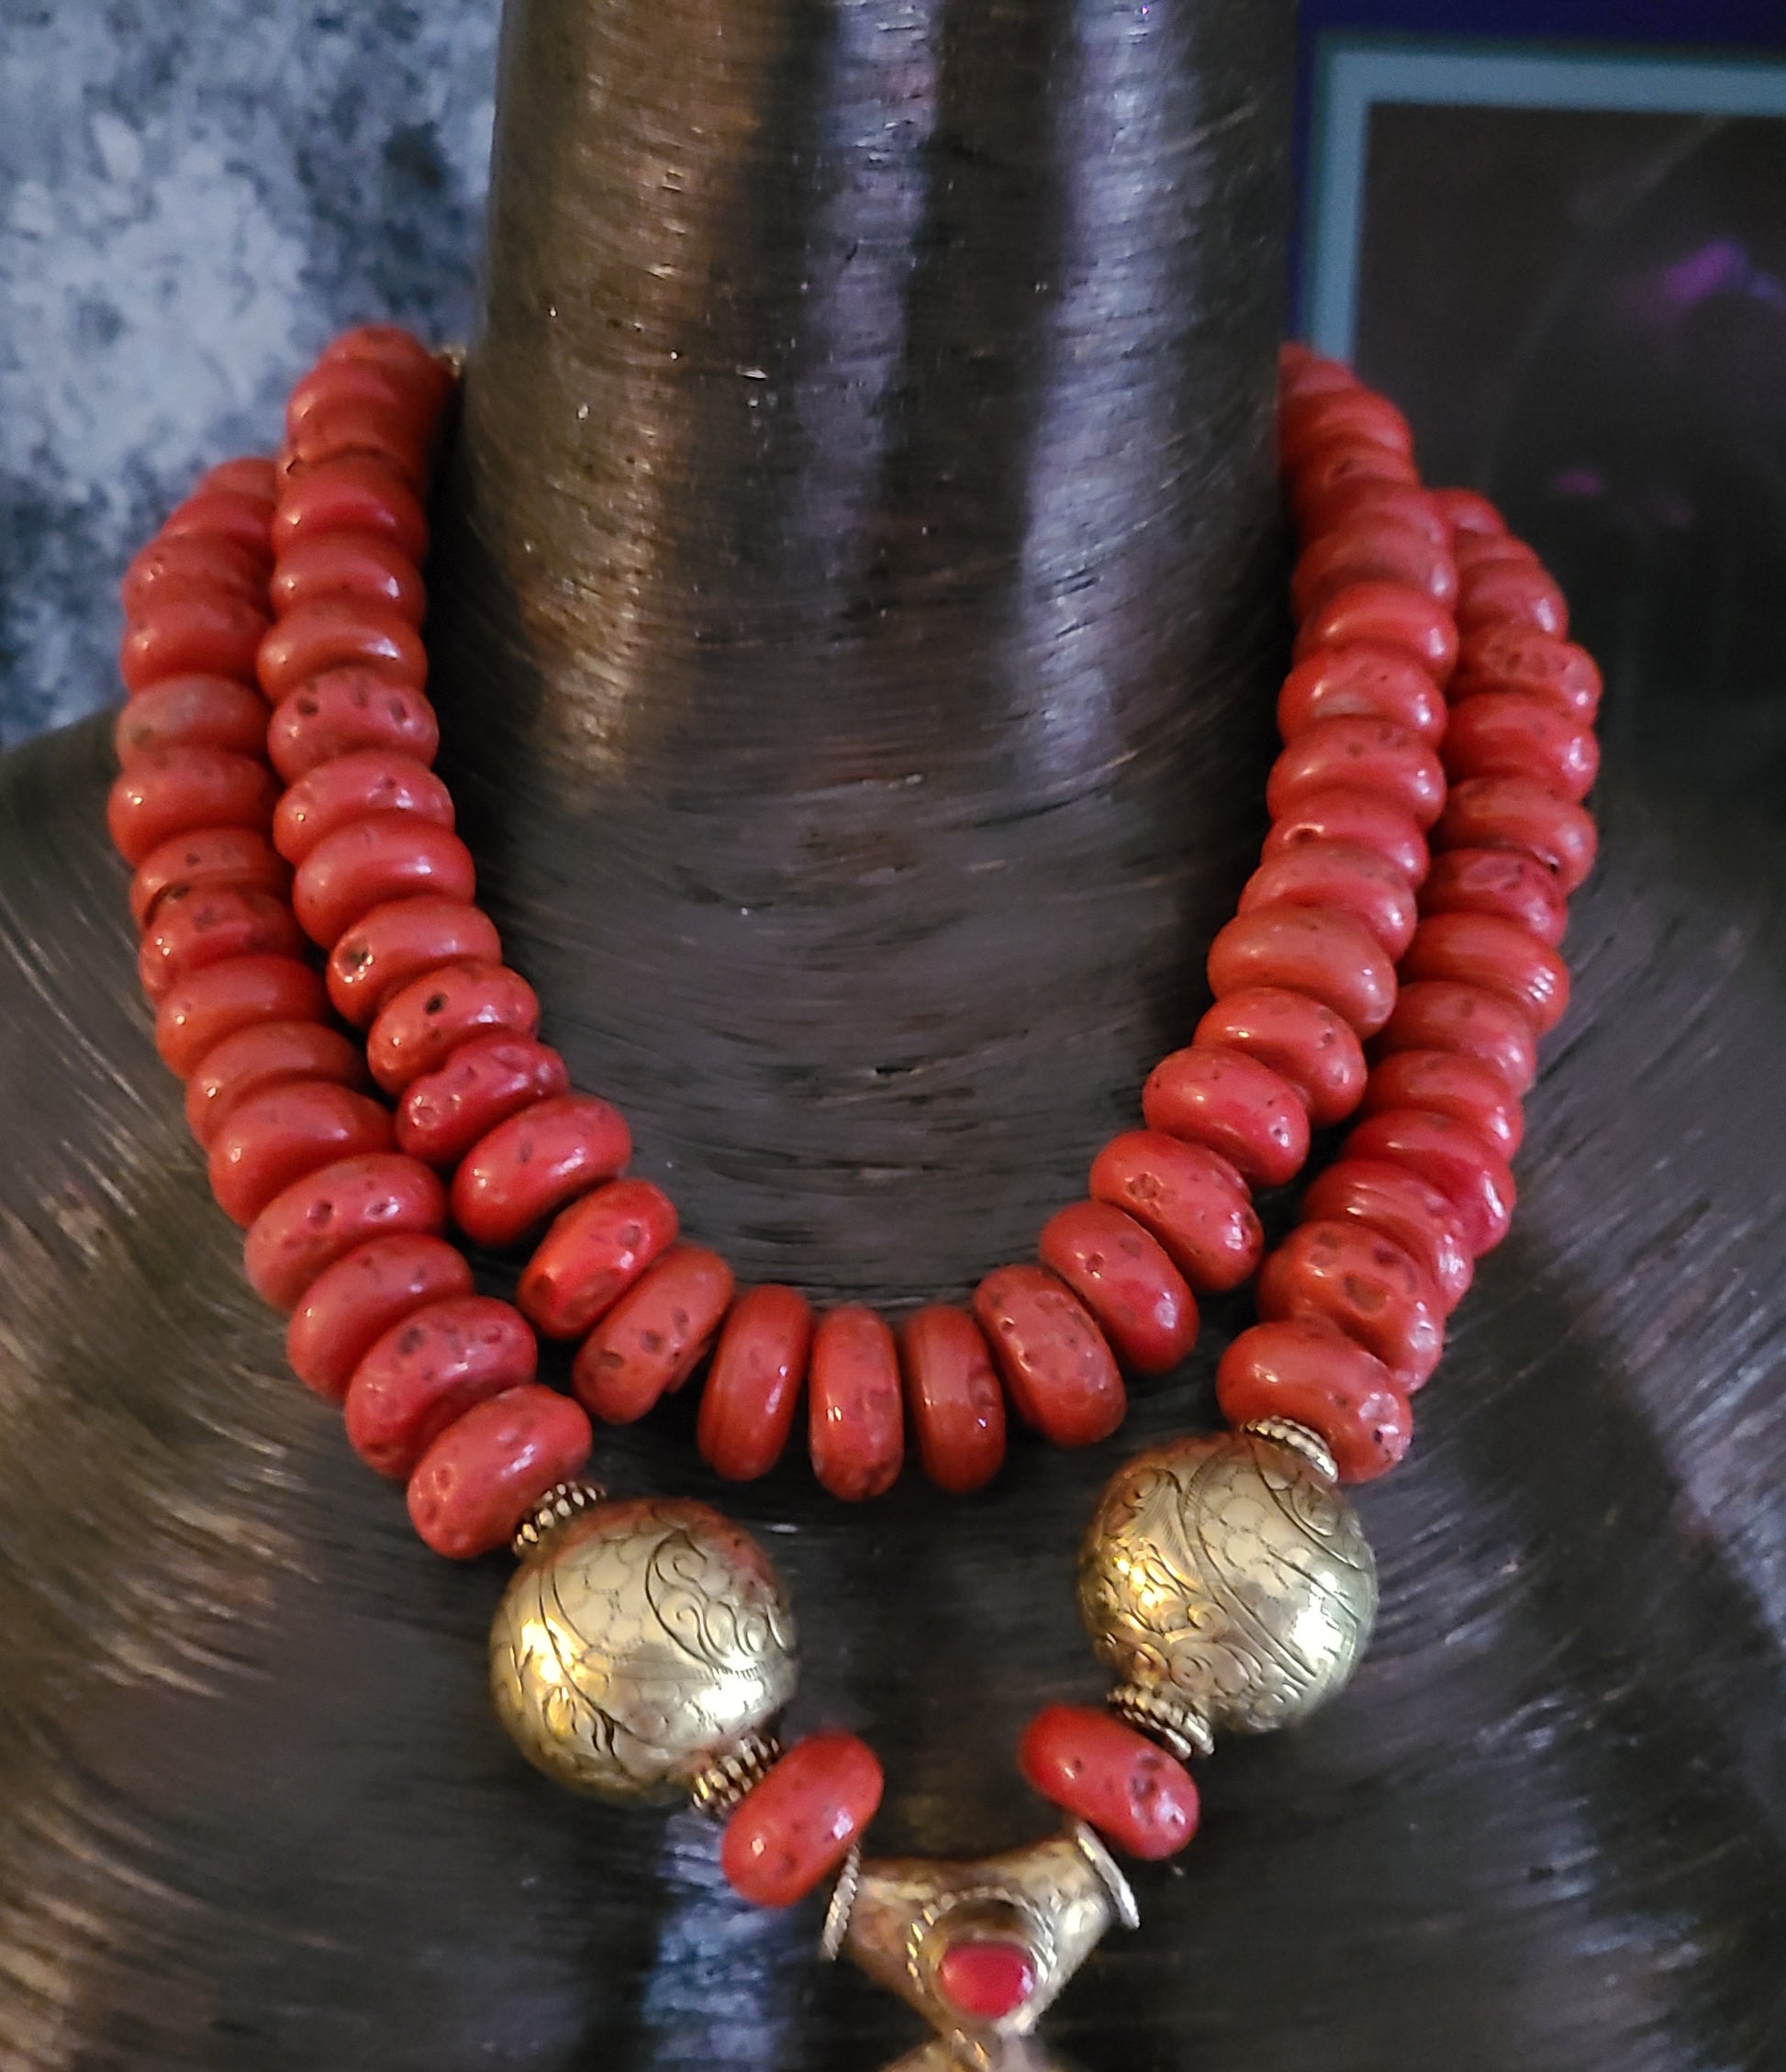 Tibetan Statement Necklace Tribal Amber Resin Ornate Brass Chinese Coin Copper & Krobo Glass Pendant Double Bird Brass Repousse